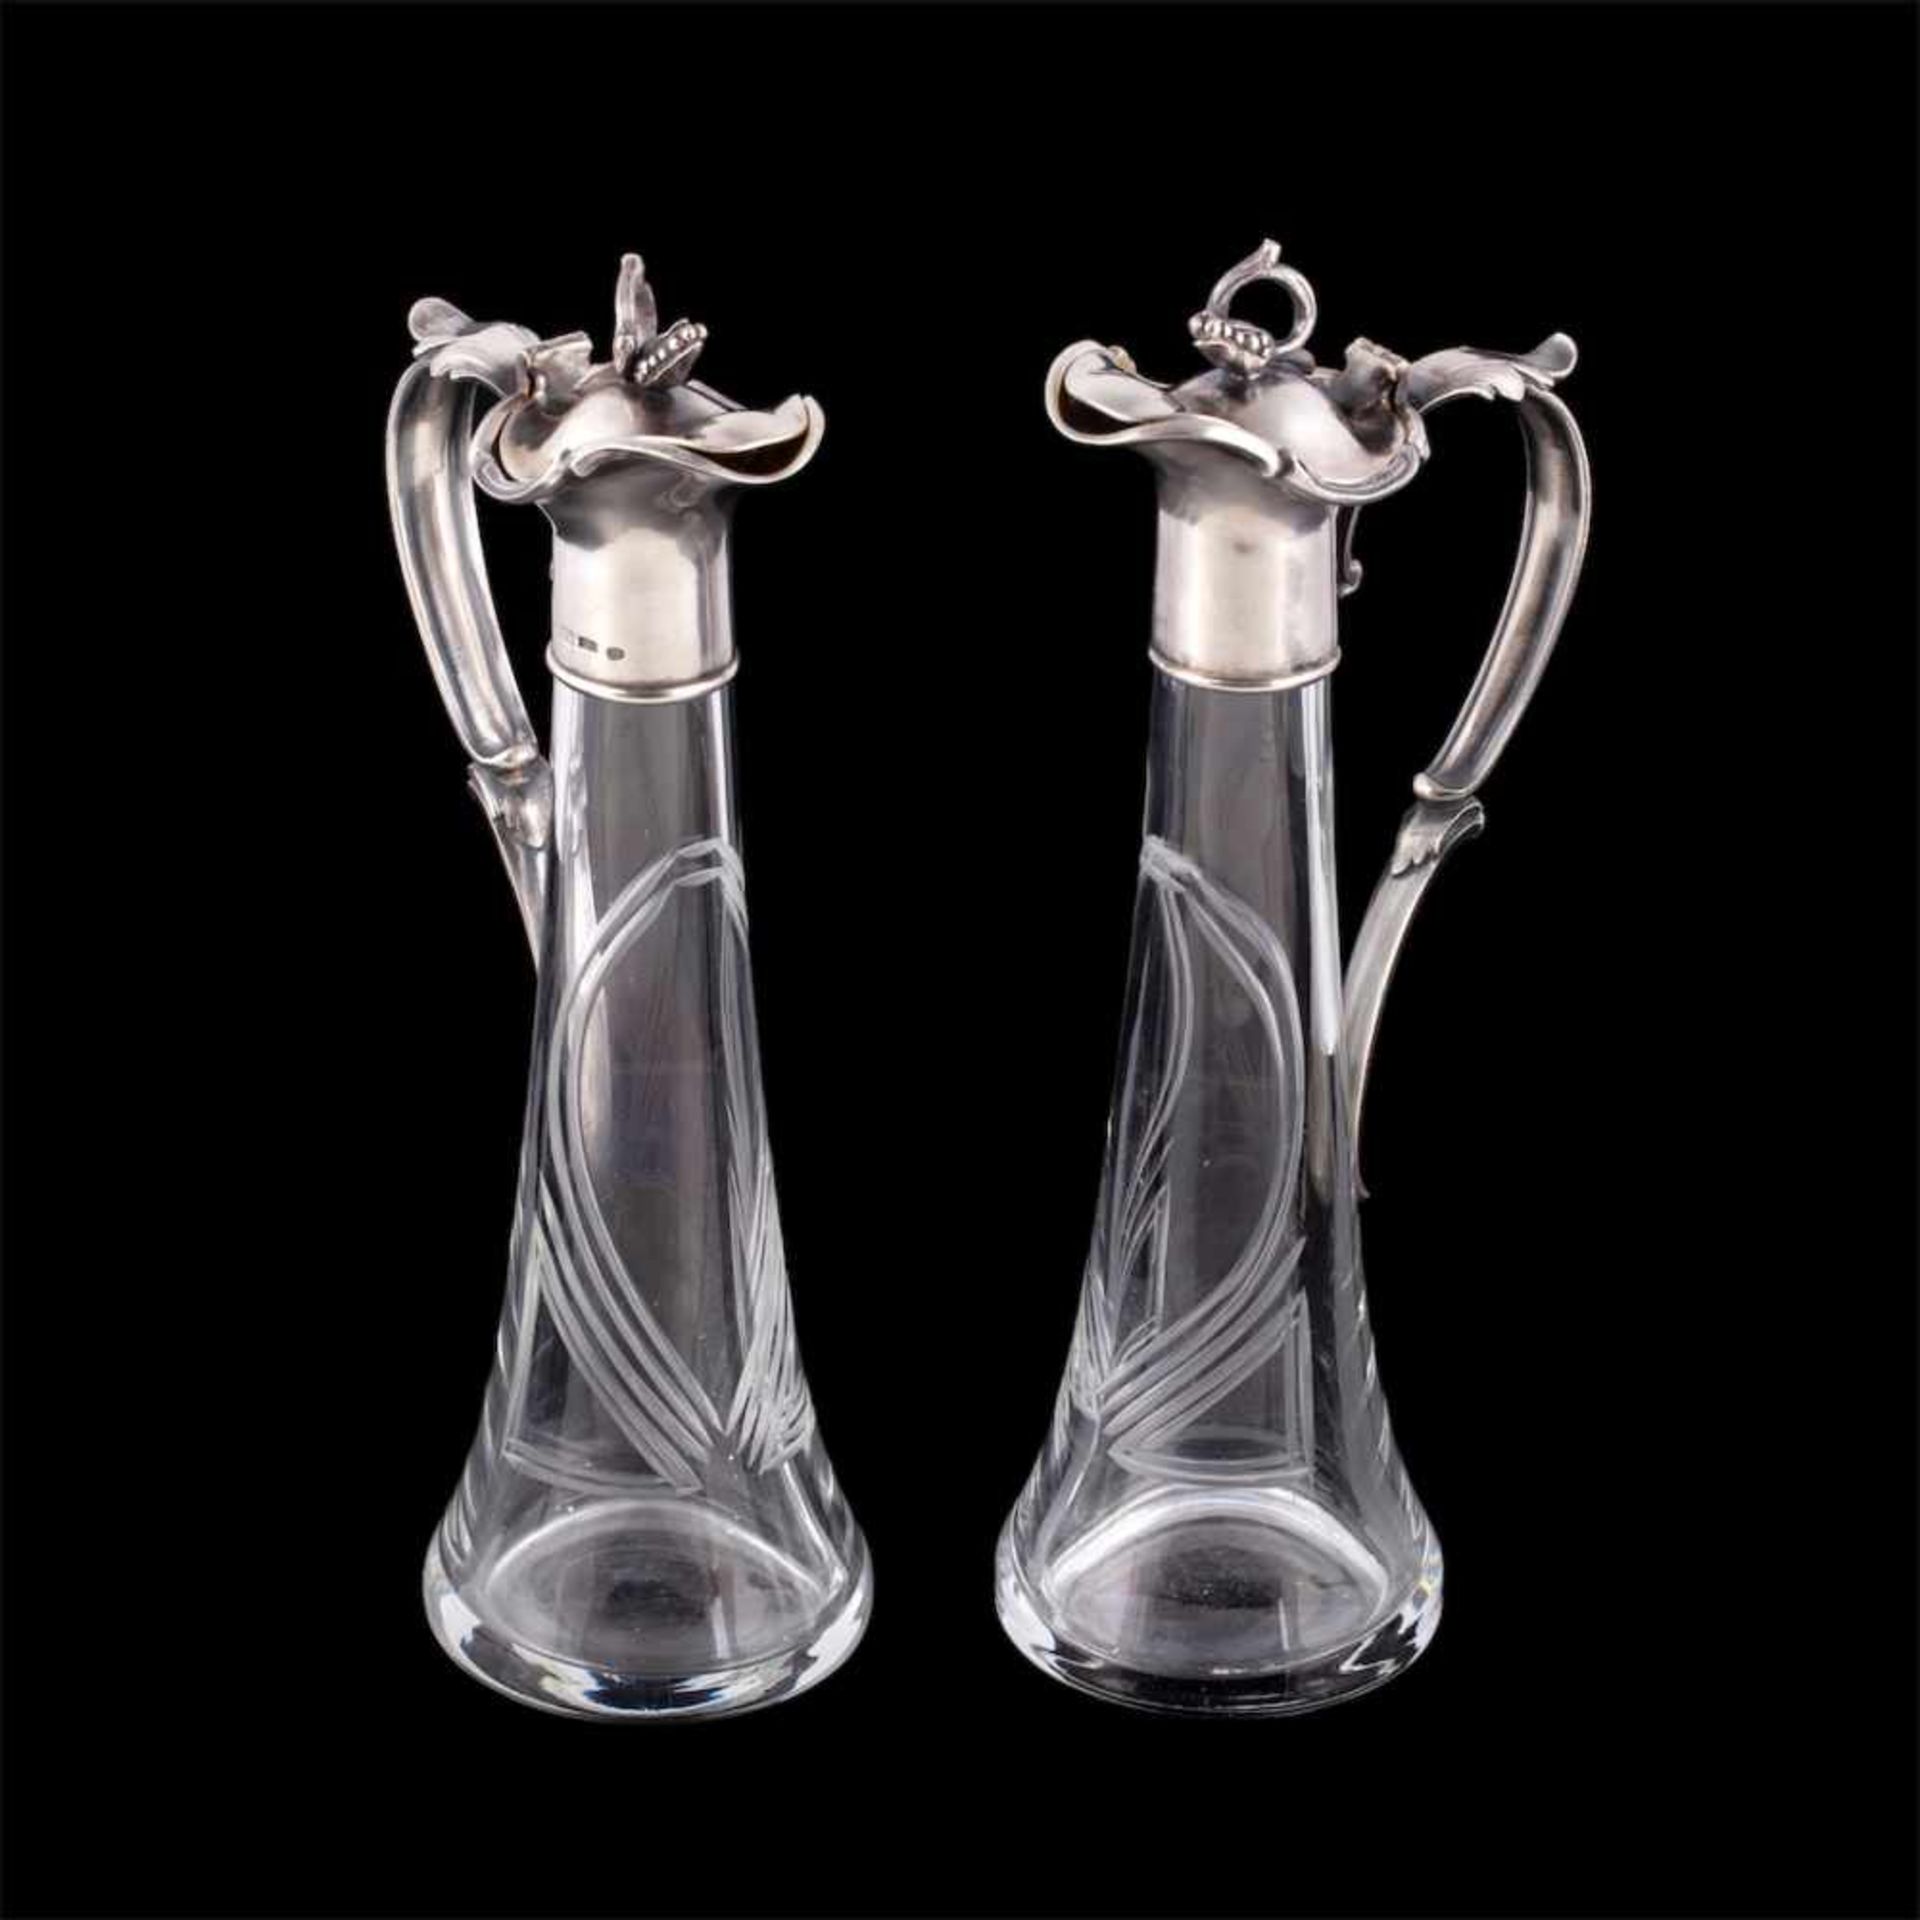 A pair of Russian Art Nouveau decanters